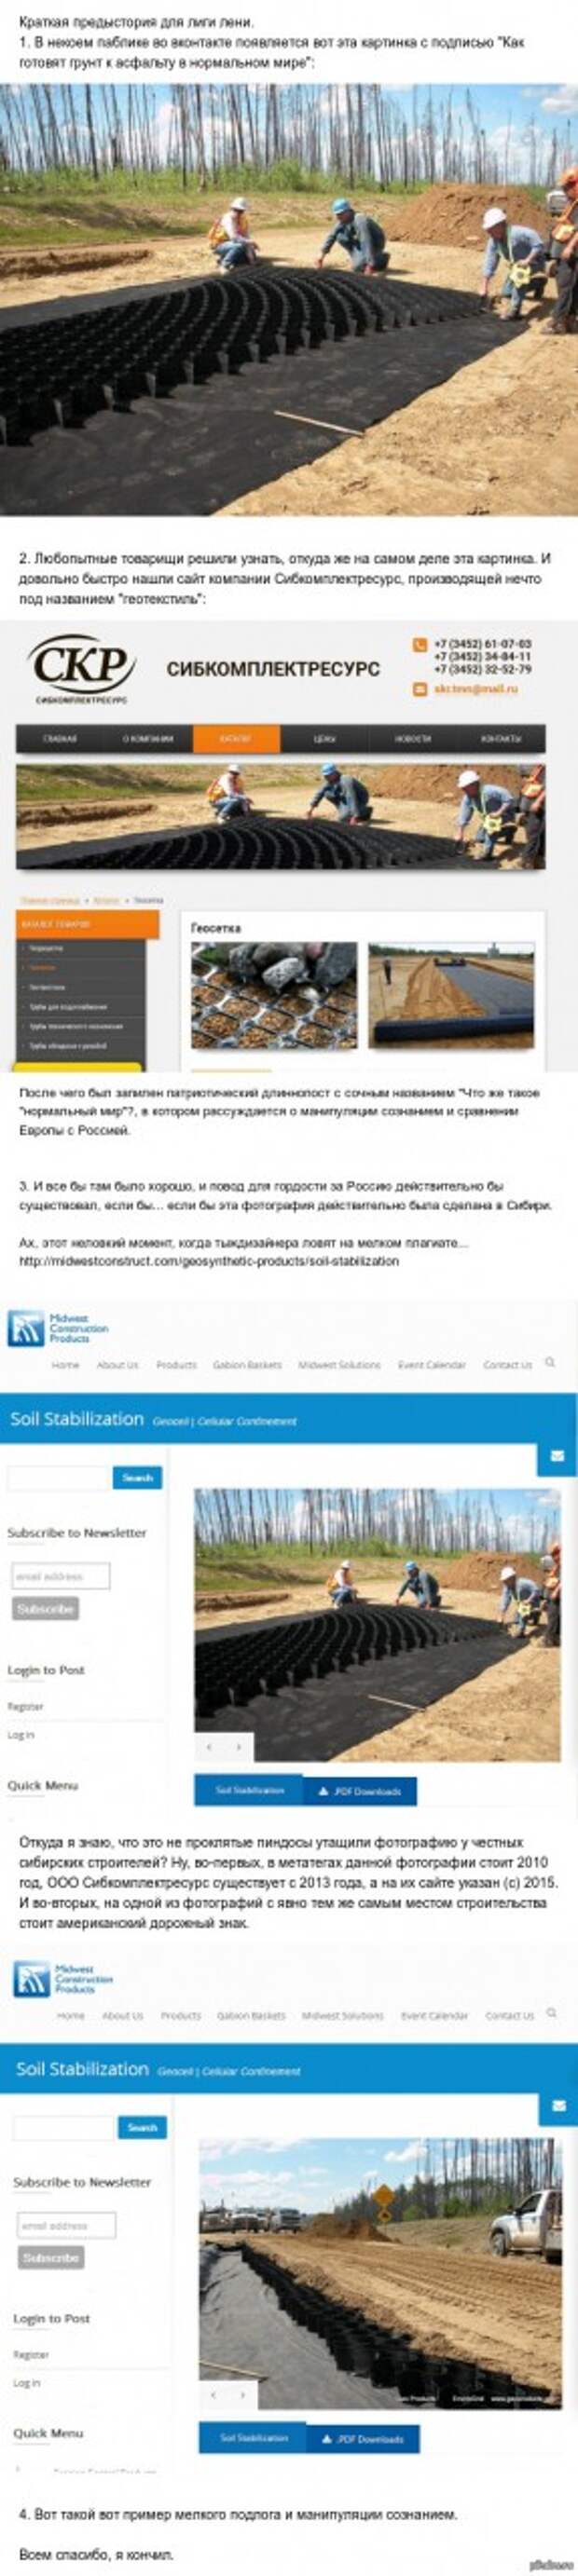 Что же такое &quot;Нормальный мир&quot; на самом деле 1. <a href="http://pikabu.ru/story/chto_zhe_takoe_quotnormalnyiy_mirquot_3529174#comments">http://pikabu.ru/story/_3529174</a> 2. http://midwestconstruct.com/geosynthetic-products/soil-stabilization